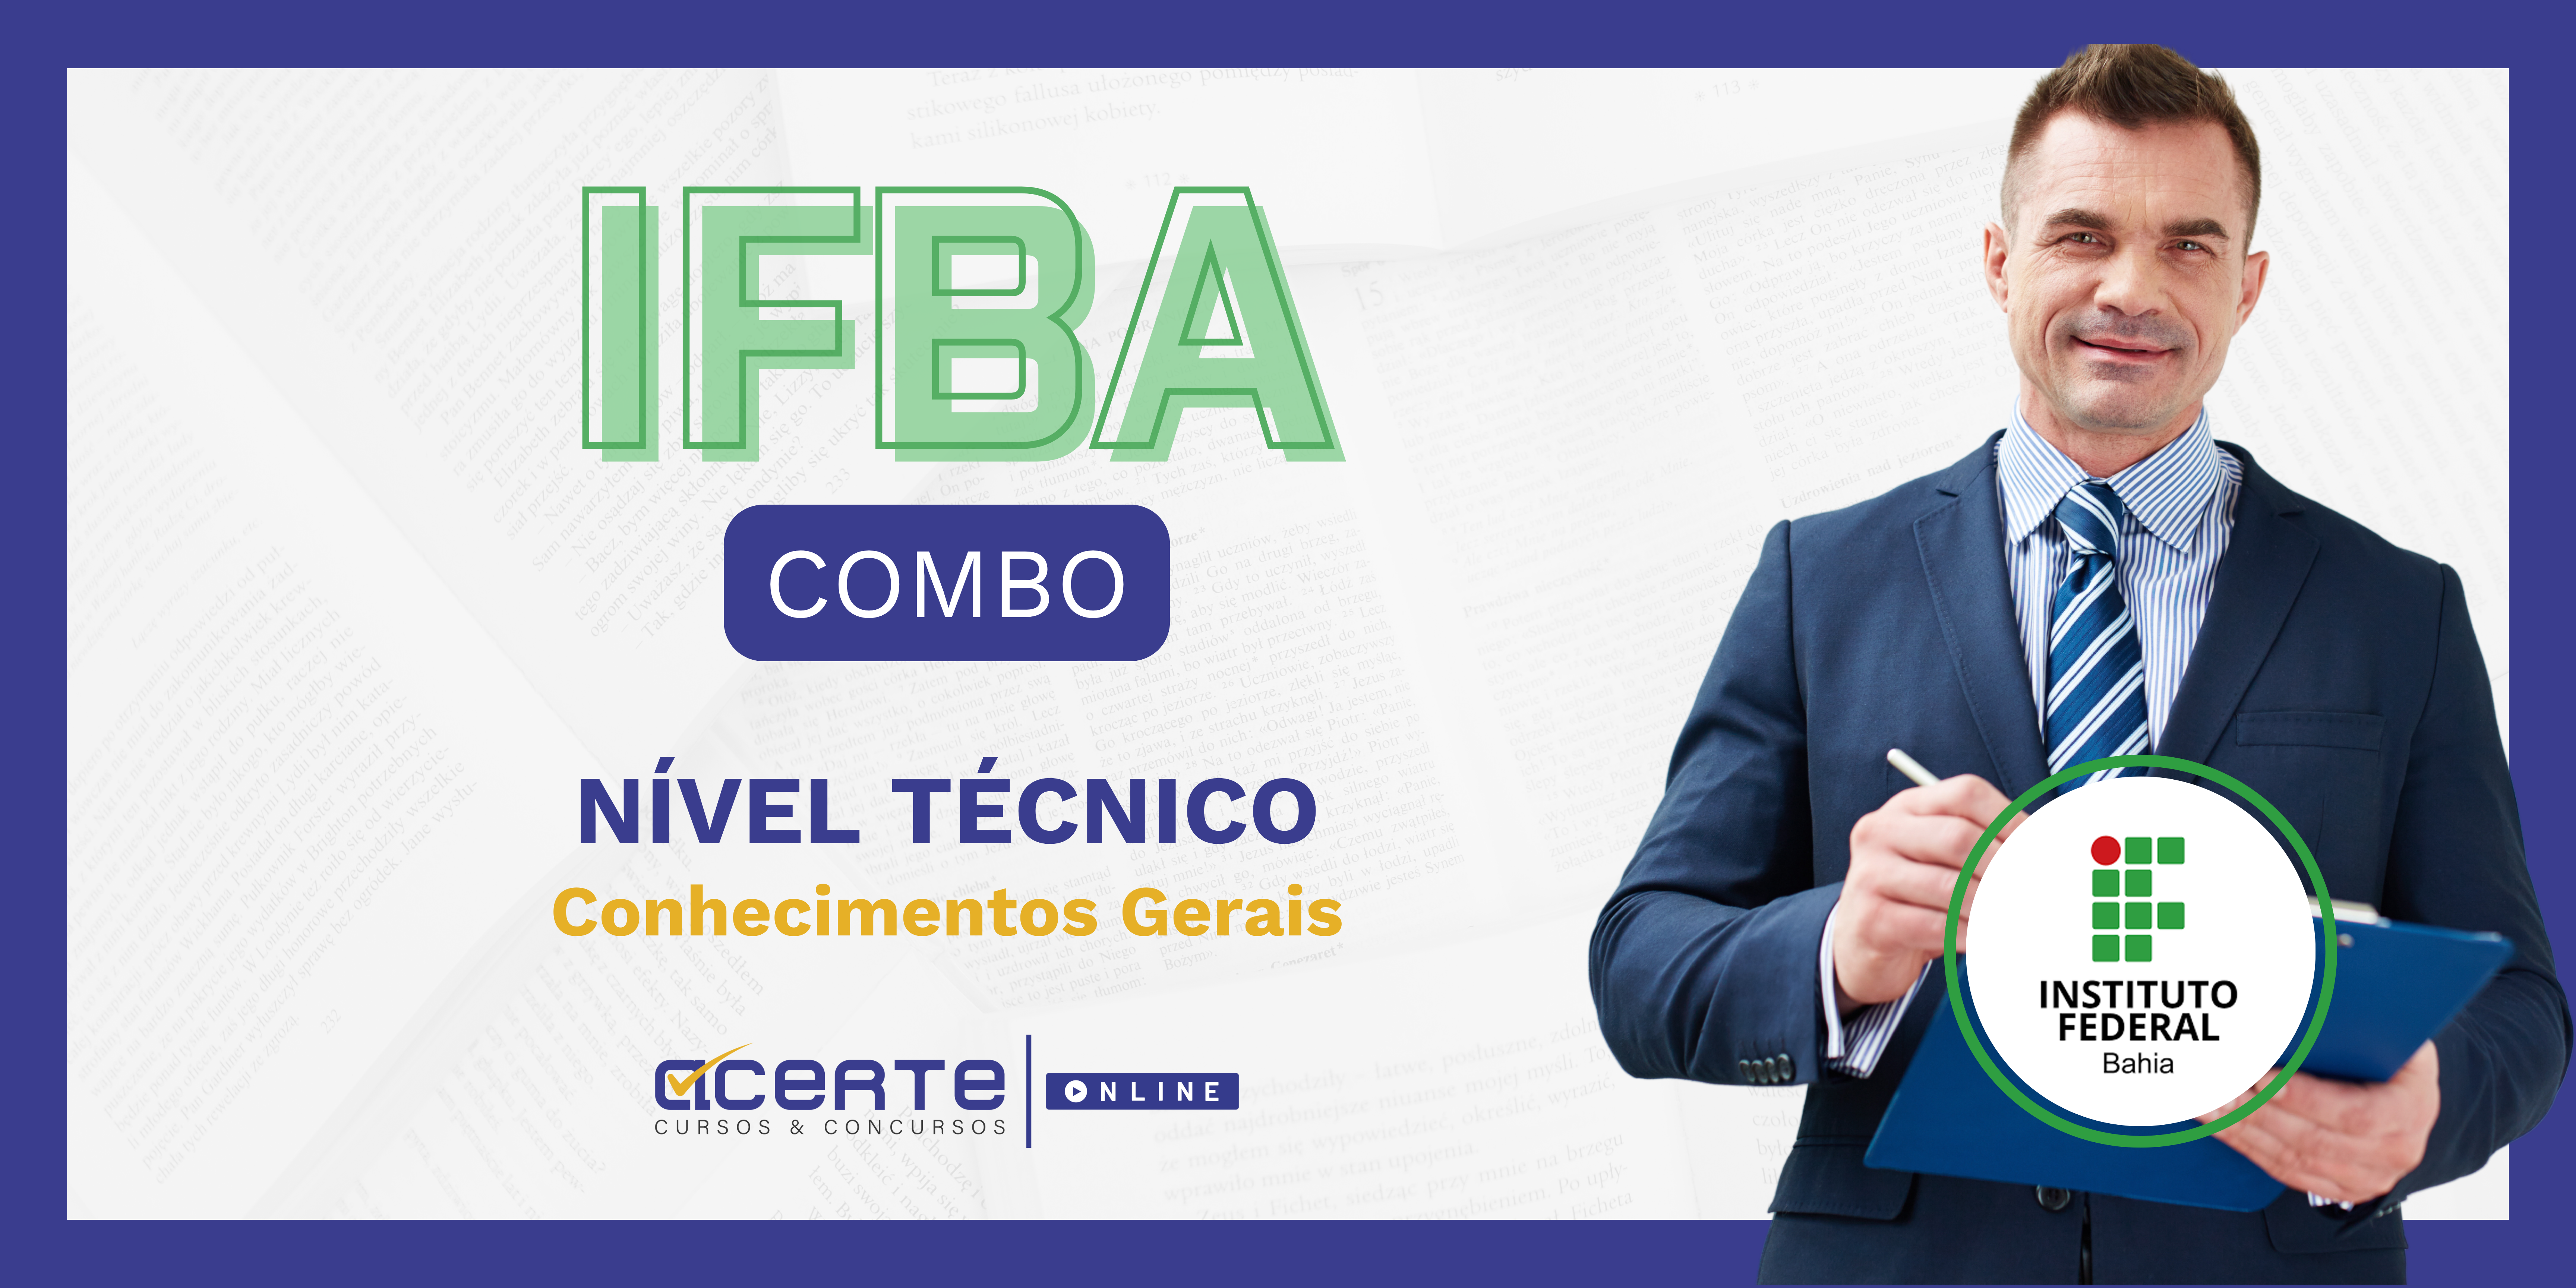 IFBA COMBO  - Nível Técnico - Conhecimentos Gerais - Edital Publicado - ONLINE